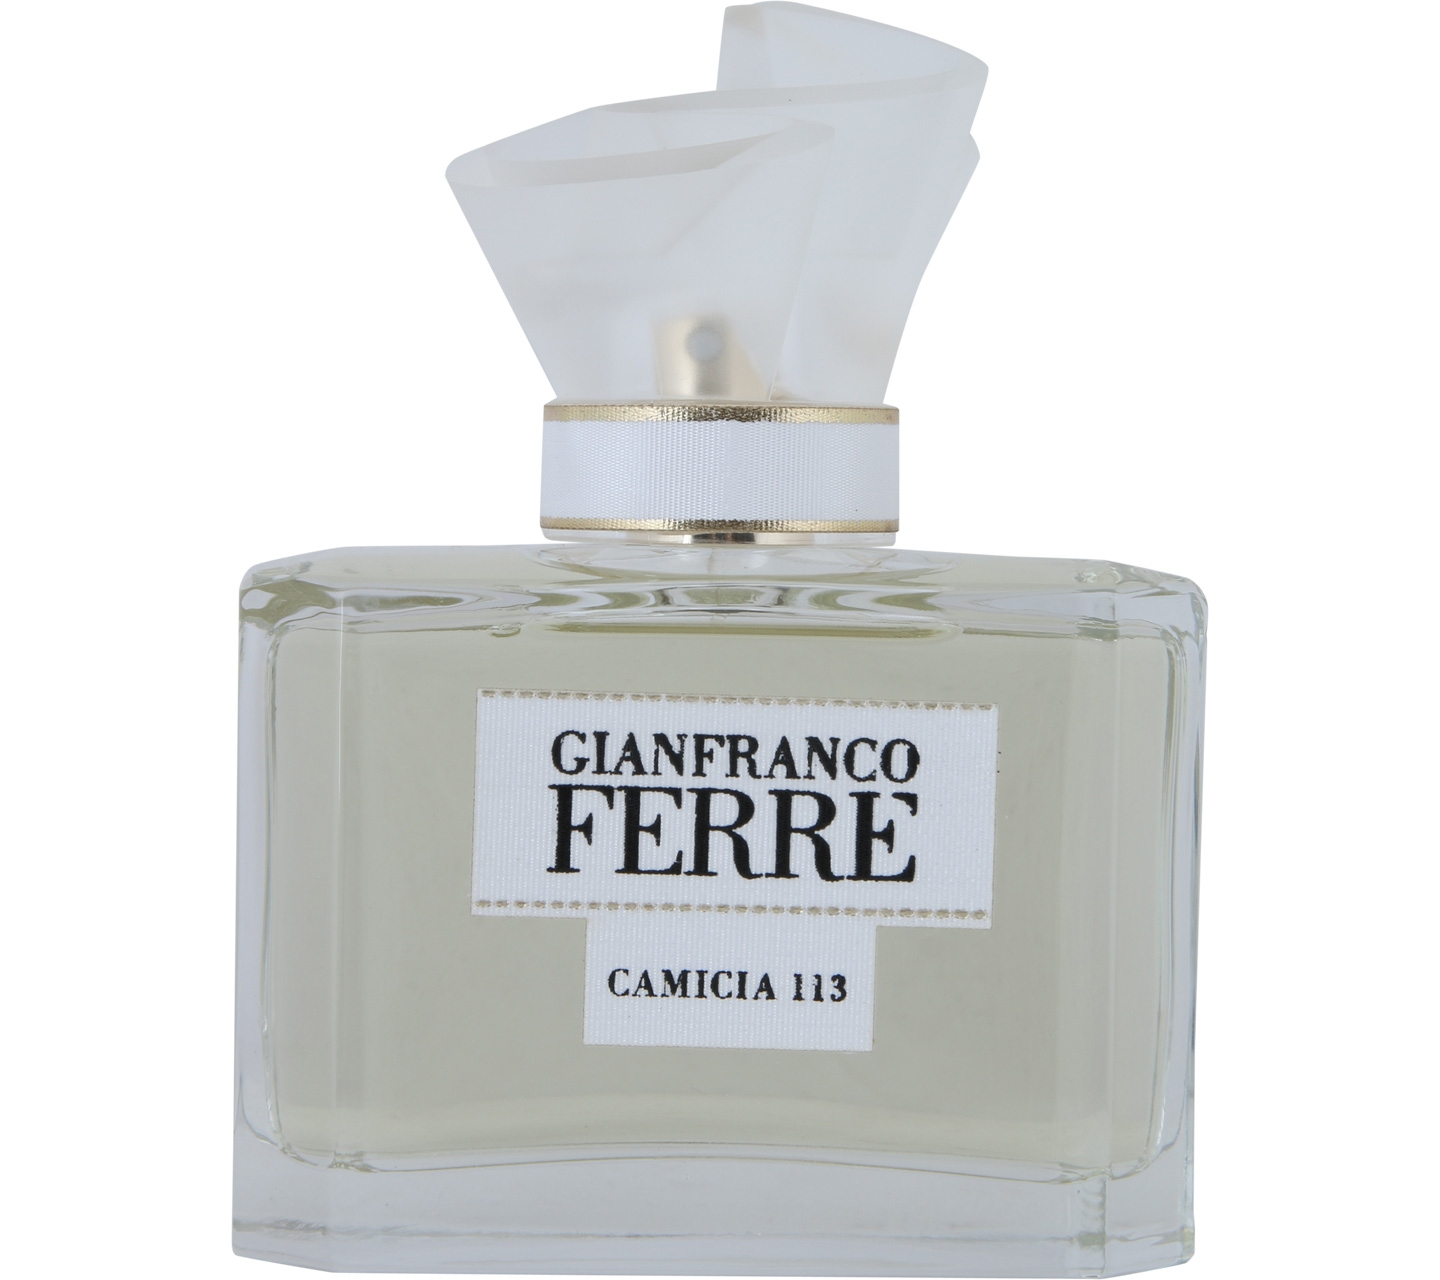 Gianfranco Ferre Camicia 113 Fragrance